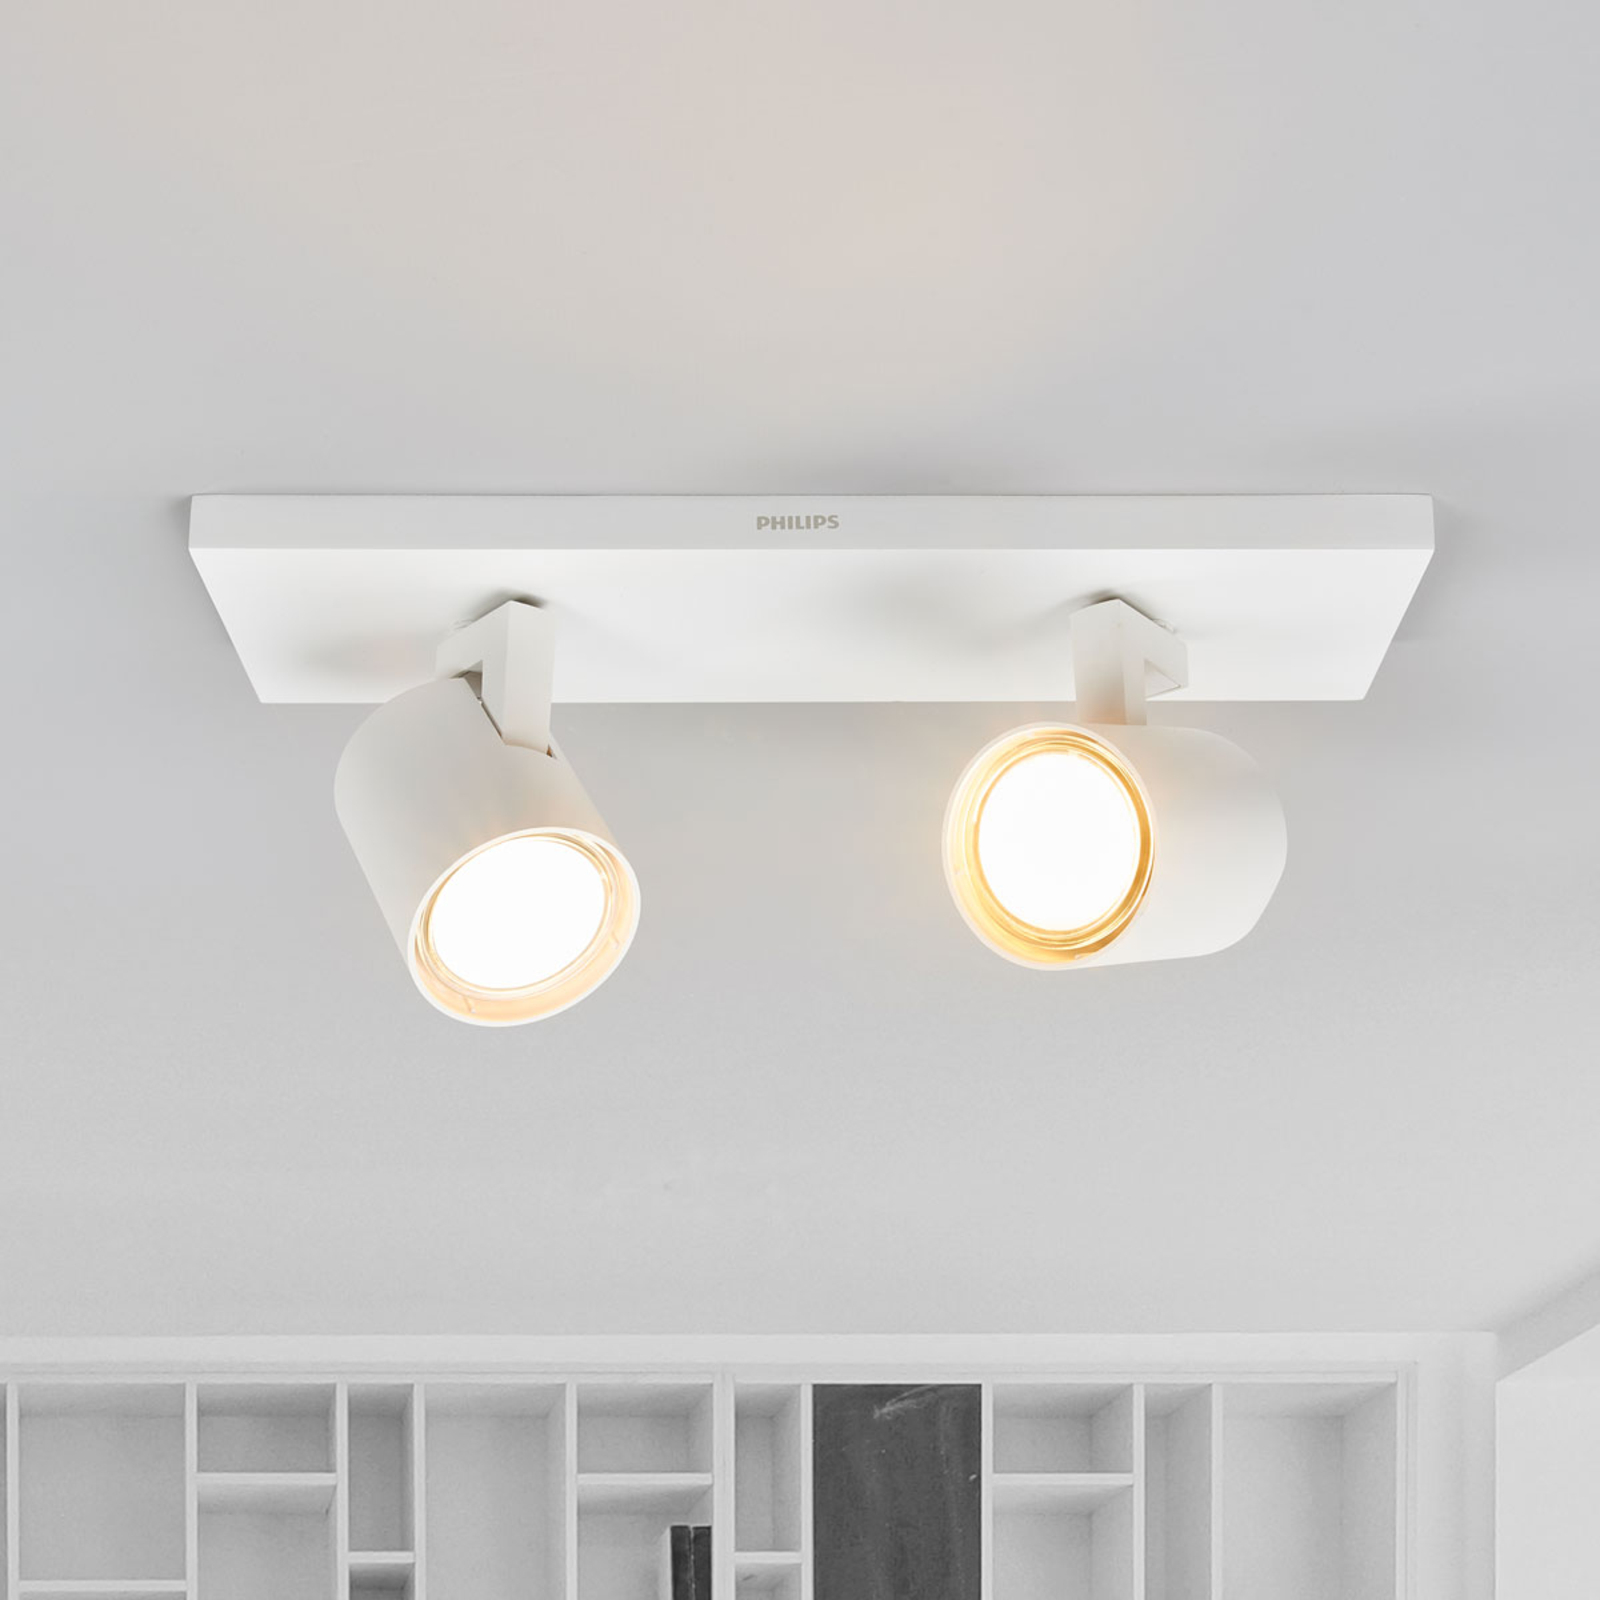 Inactief schokkend stil 2-Spots LED plafondlamp Runner | Lampen24.be